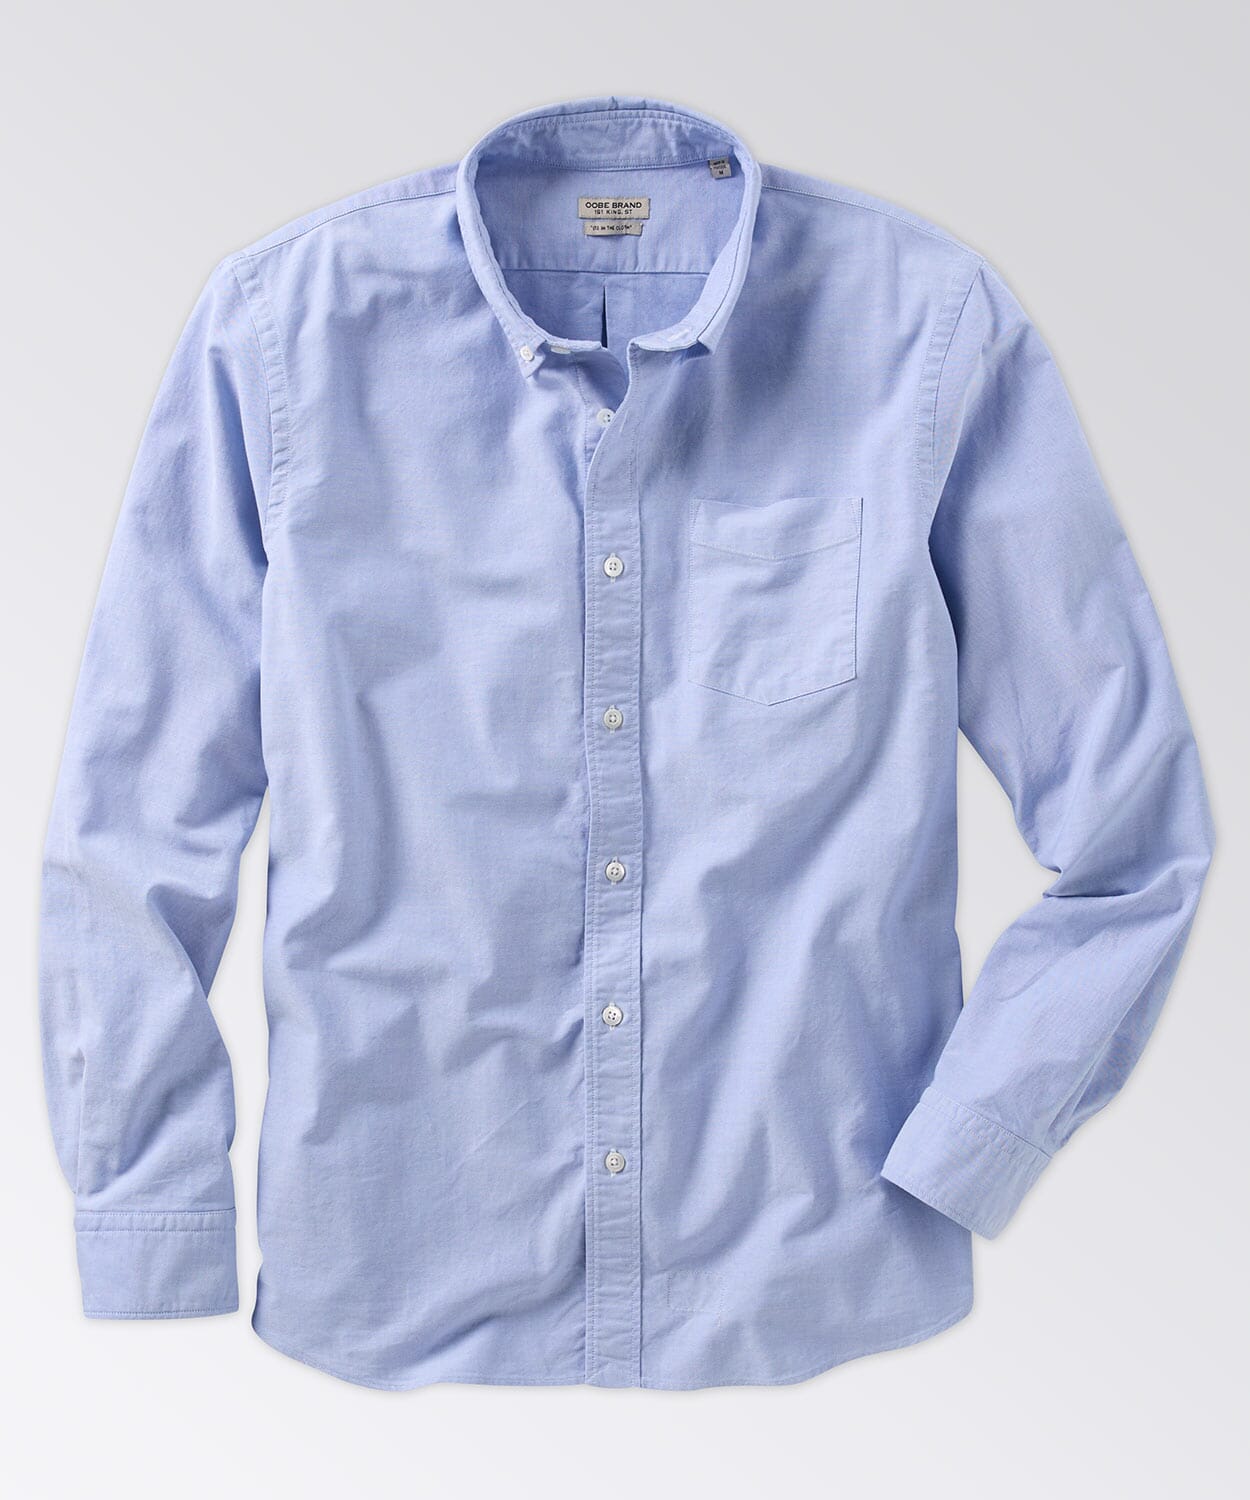 Anson Shirt Button Downs OOBE BRAND Blue Oxford S 